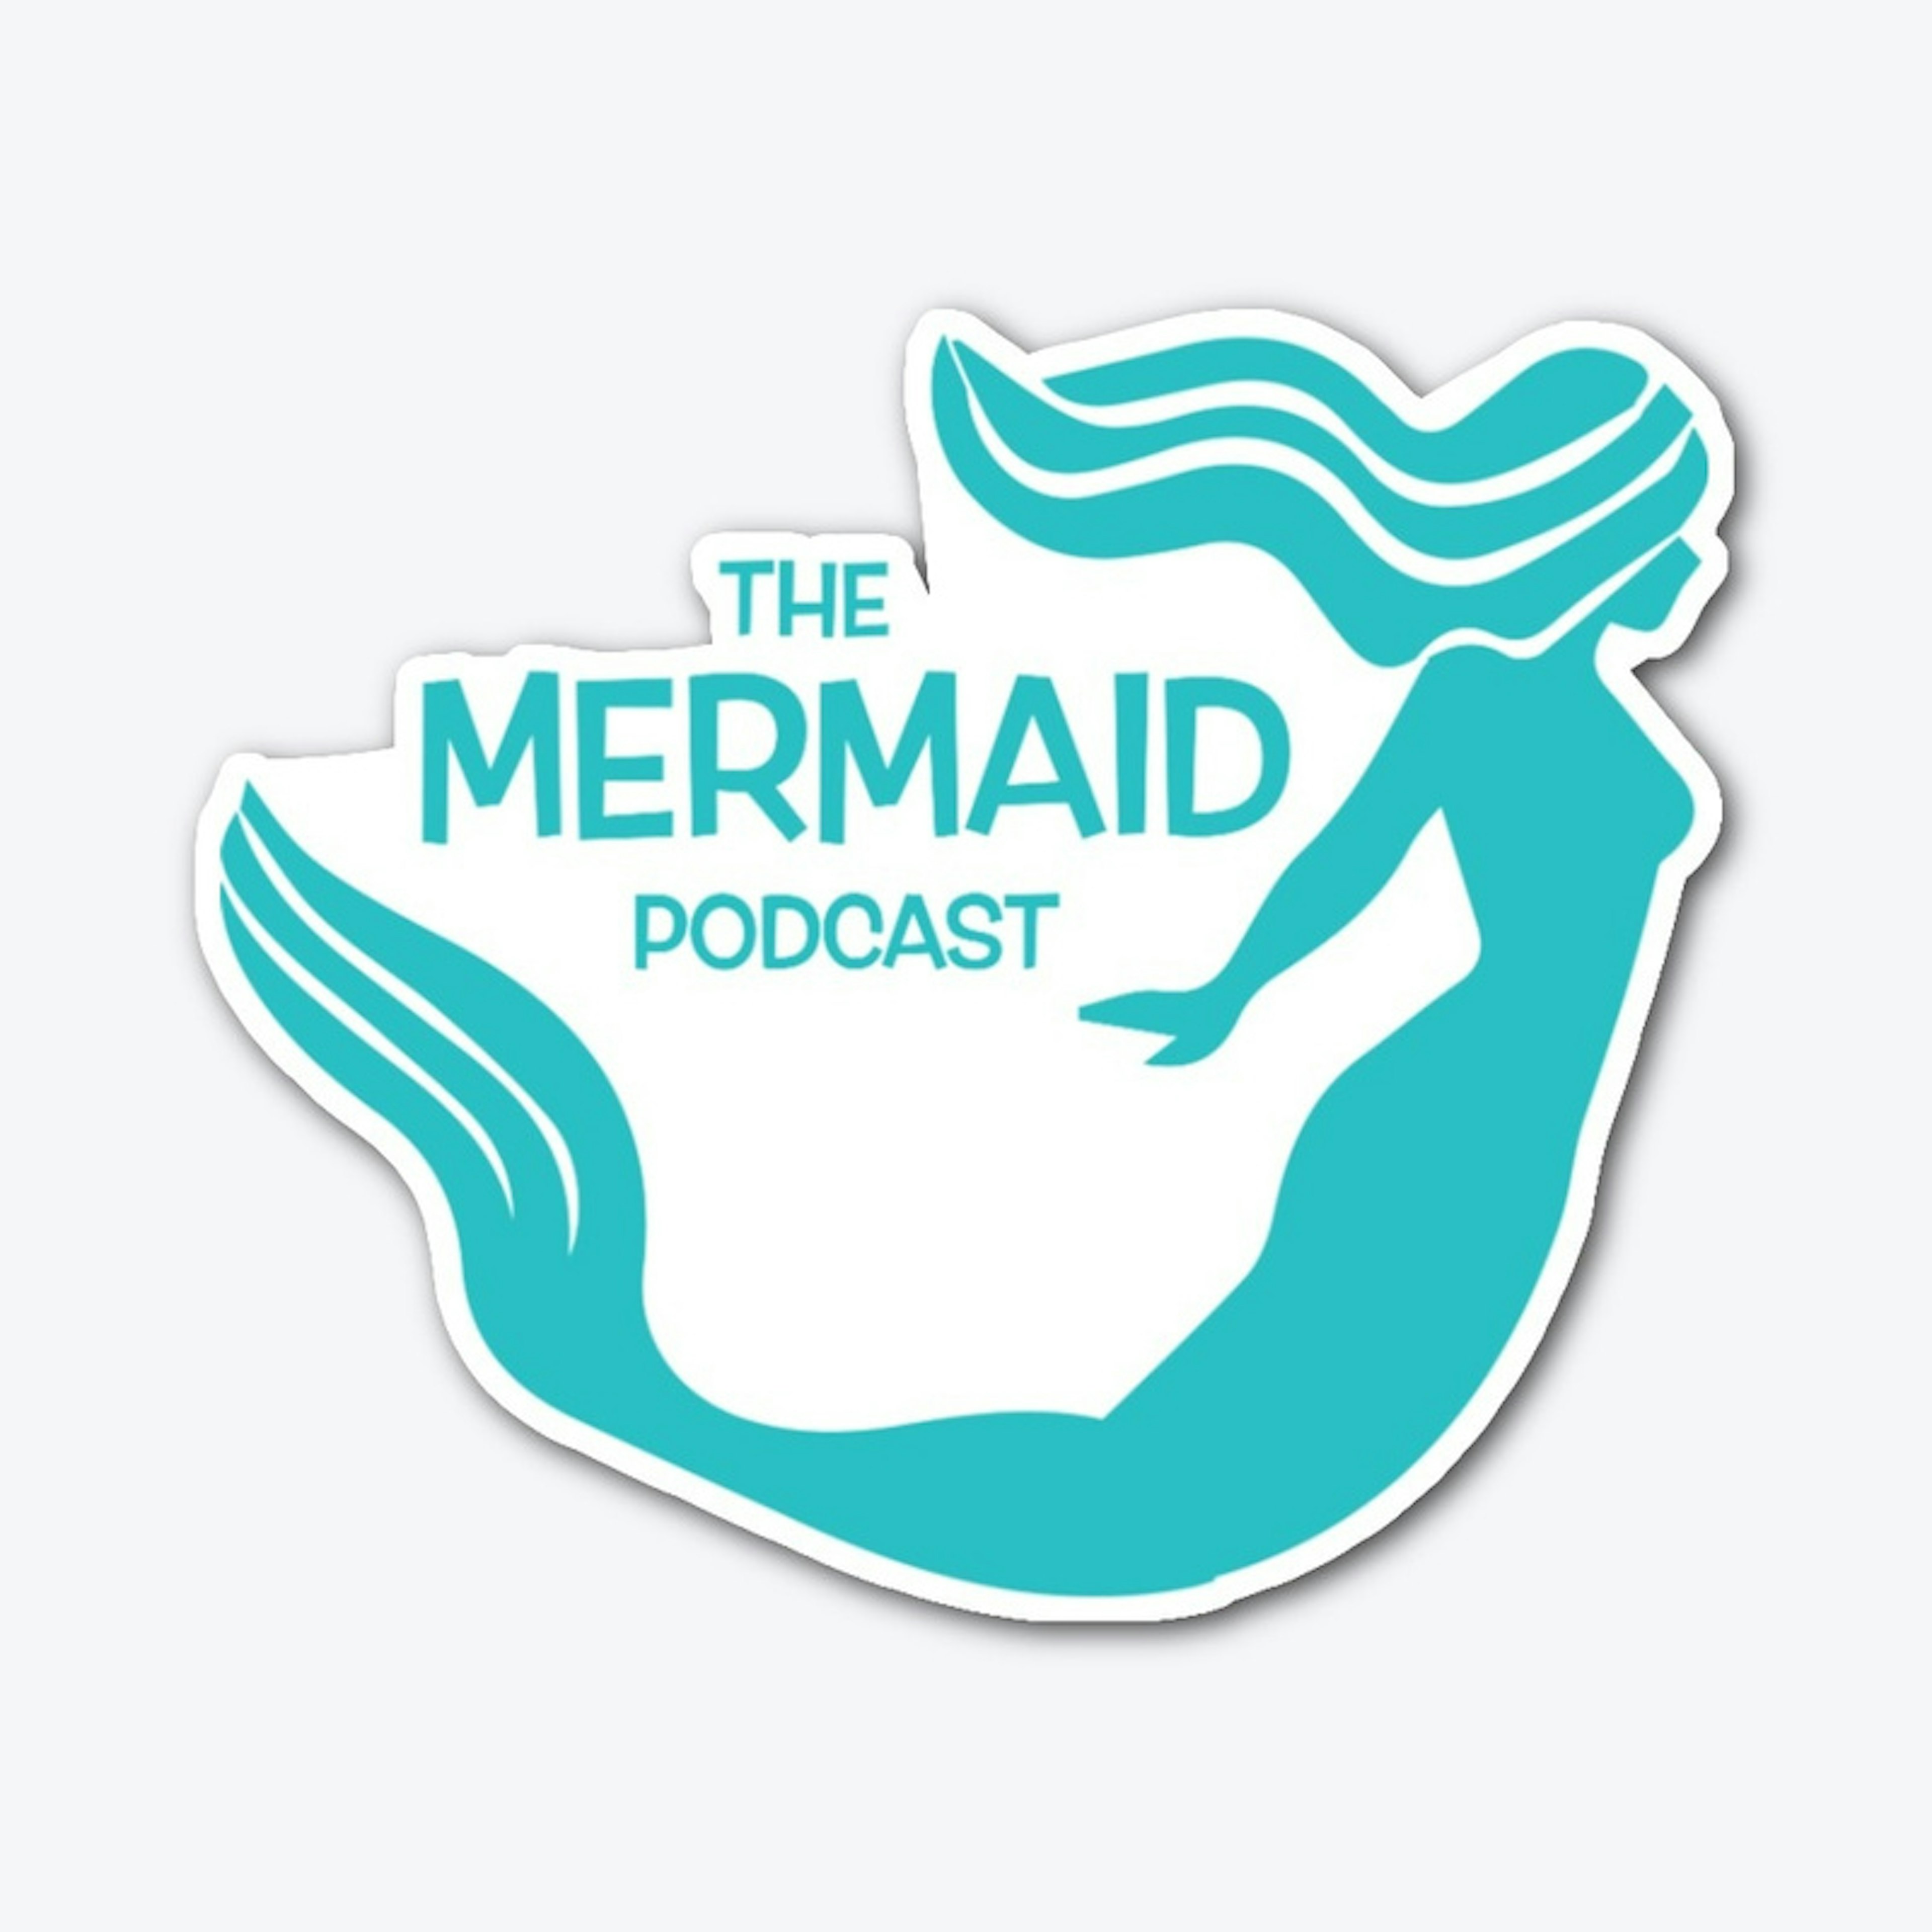 Mermaid Podcast - Blue Mermaid Face Mask